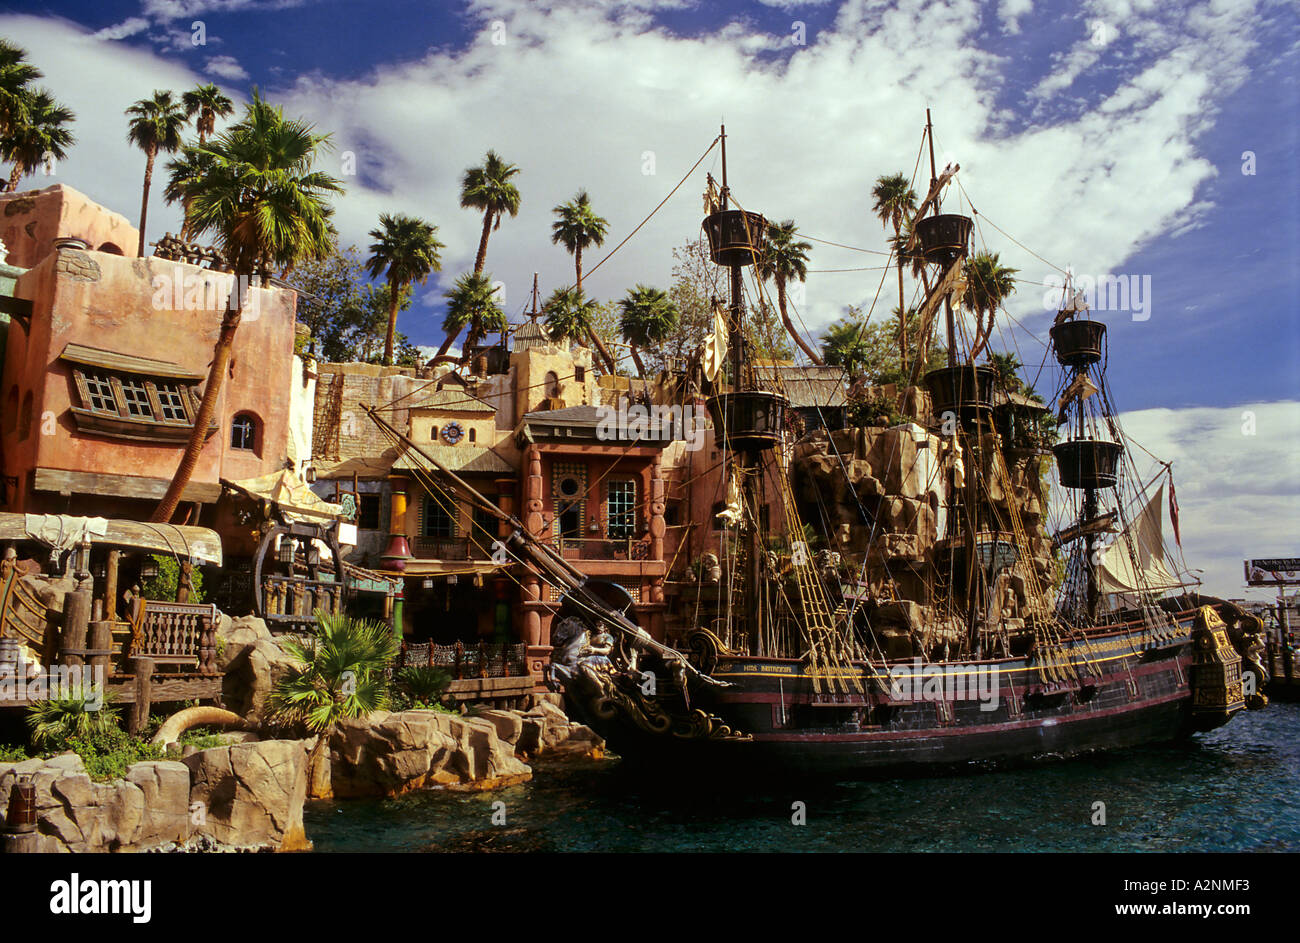 Village пиратка. Тортуга корабль пираты Карибского моря. Порт Тортуга пираты Карибского моря. Тортуга город пиратов. А раты Карибского моря, Тортуга.